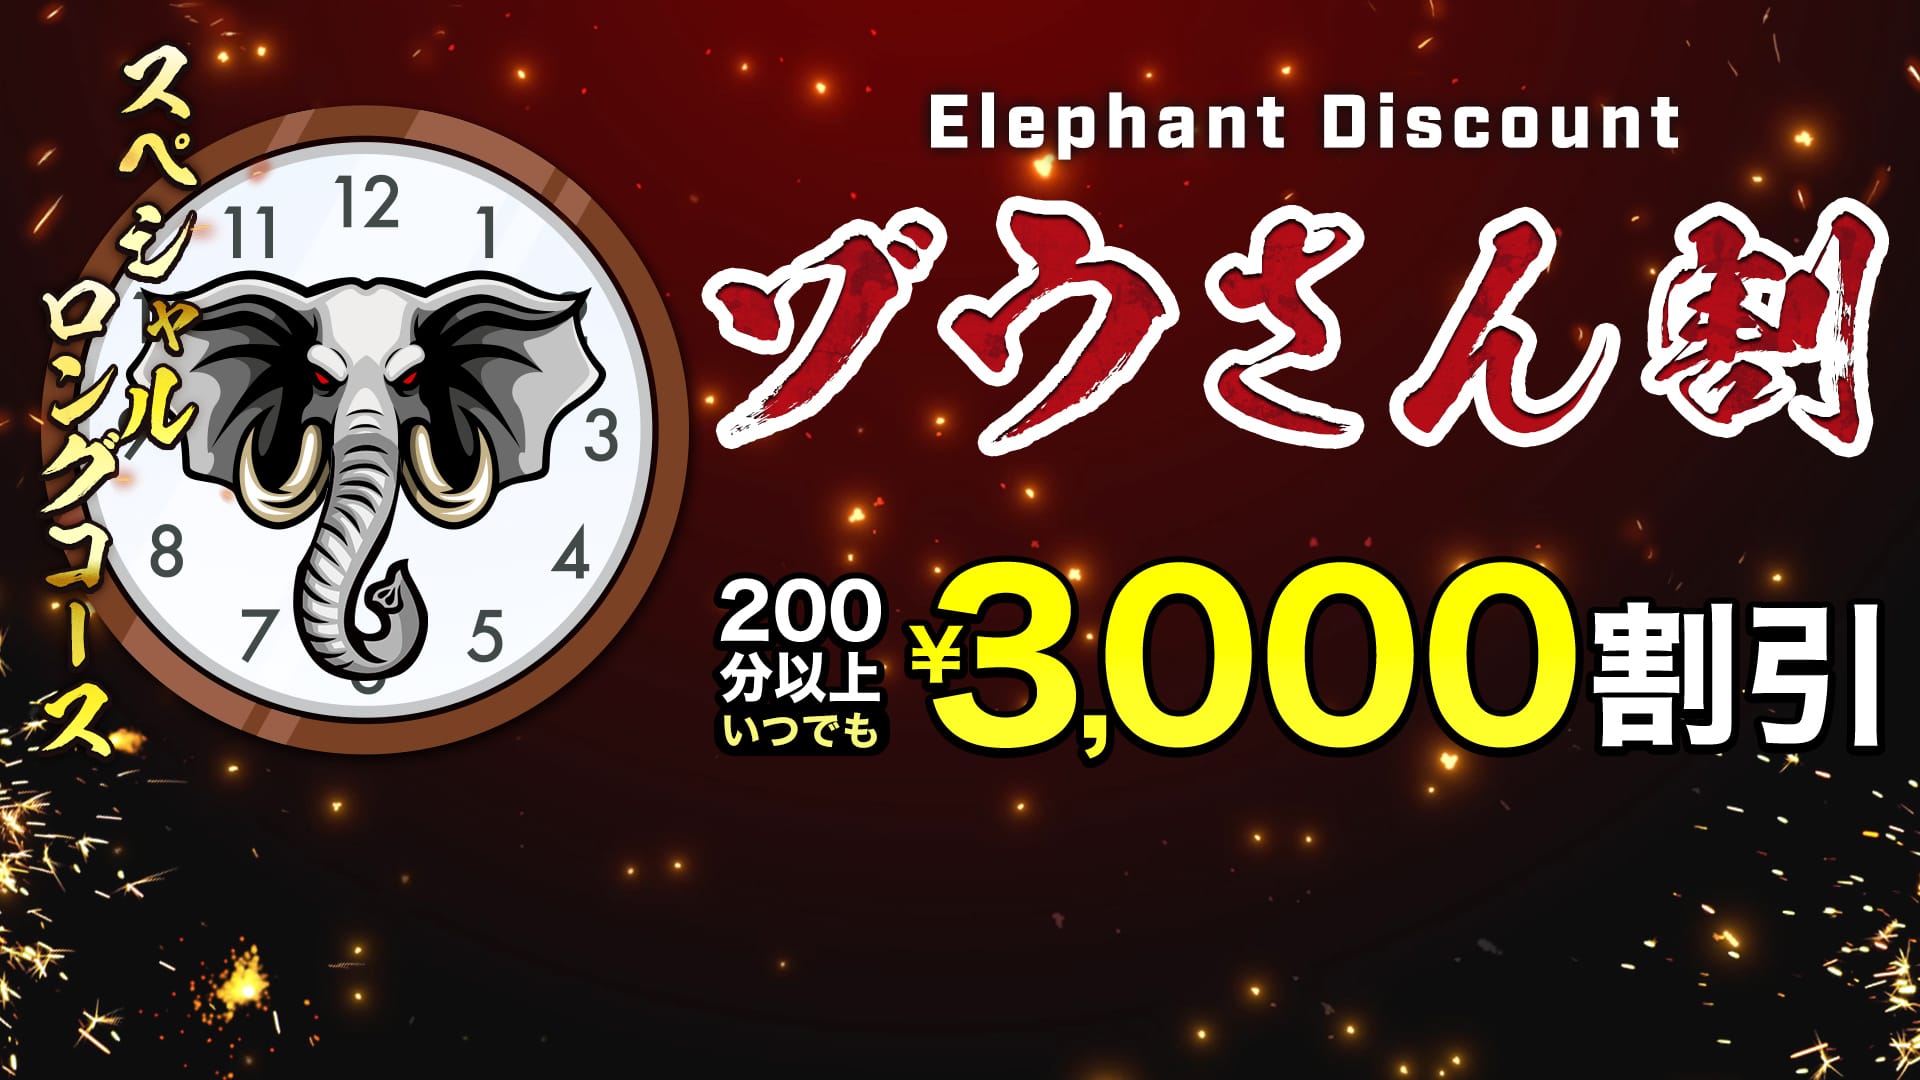 「Elephant discount」04/25(木) 17:40 | 千葉人妻花壇のお得なニュース